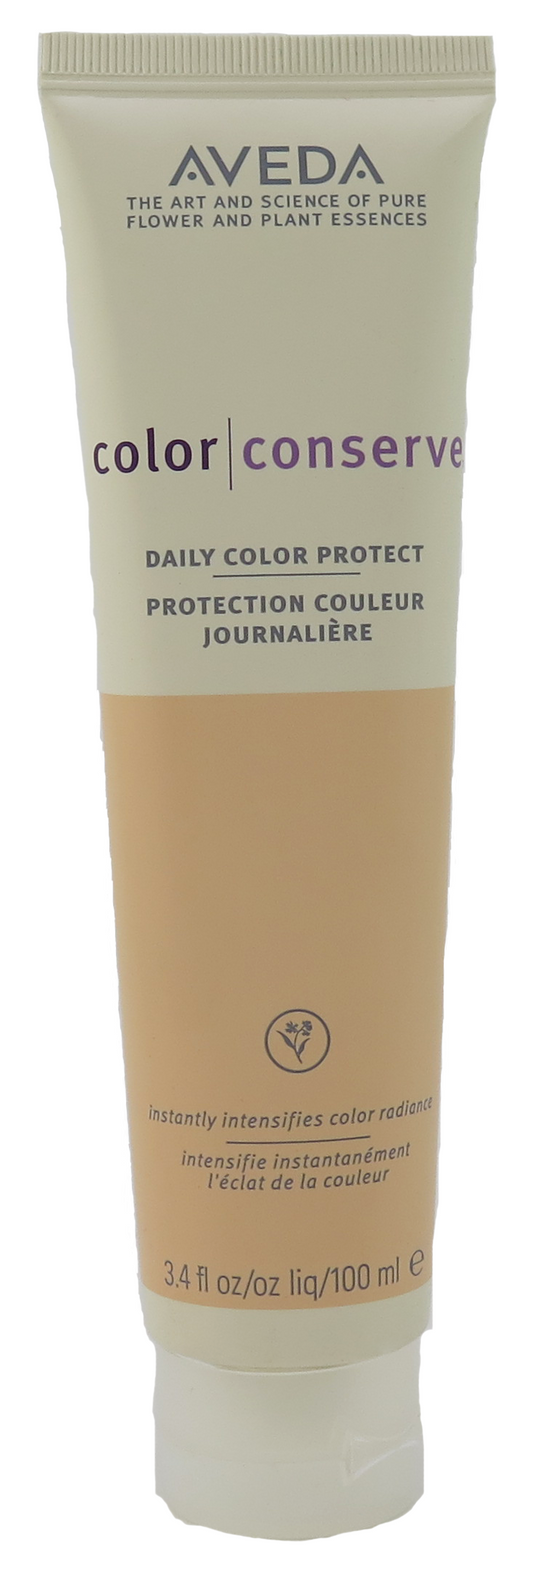 Aveda Color Conserve Daily Color Protect 3.4 Fl oz